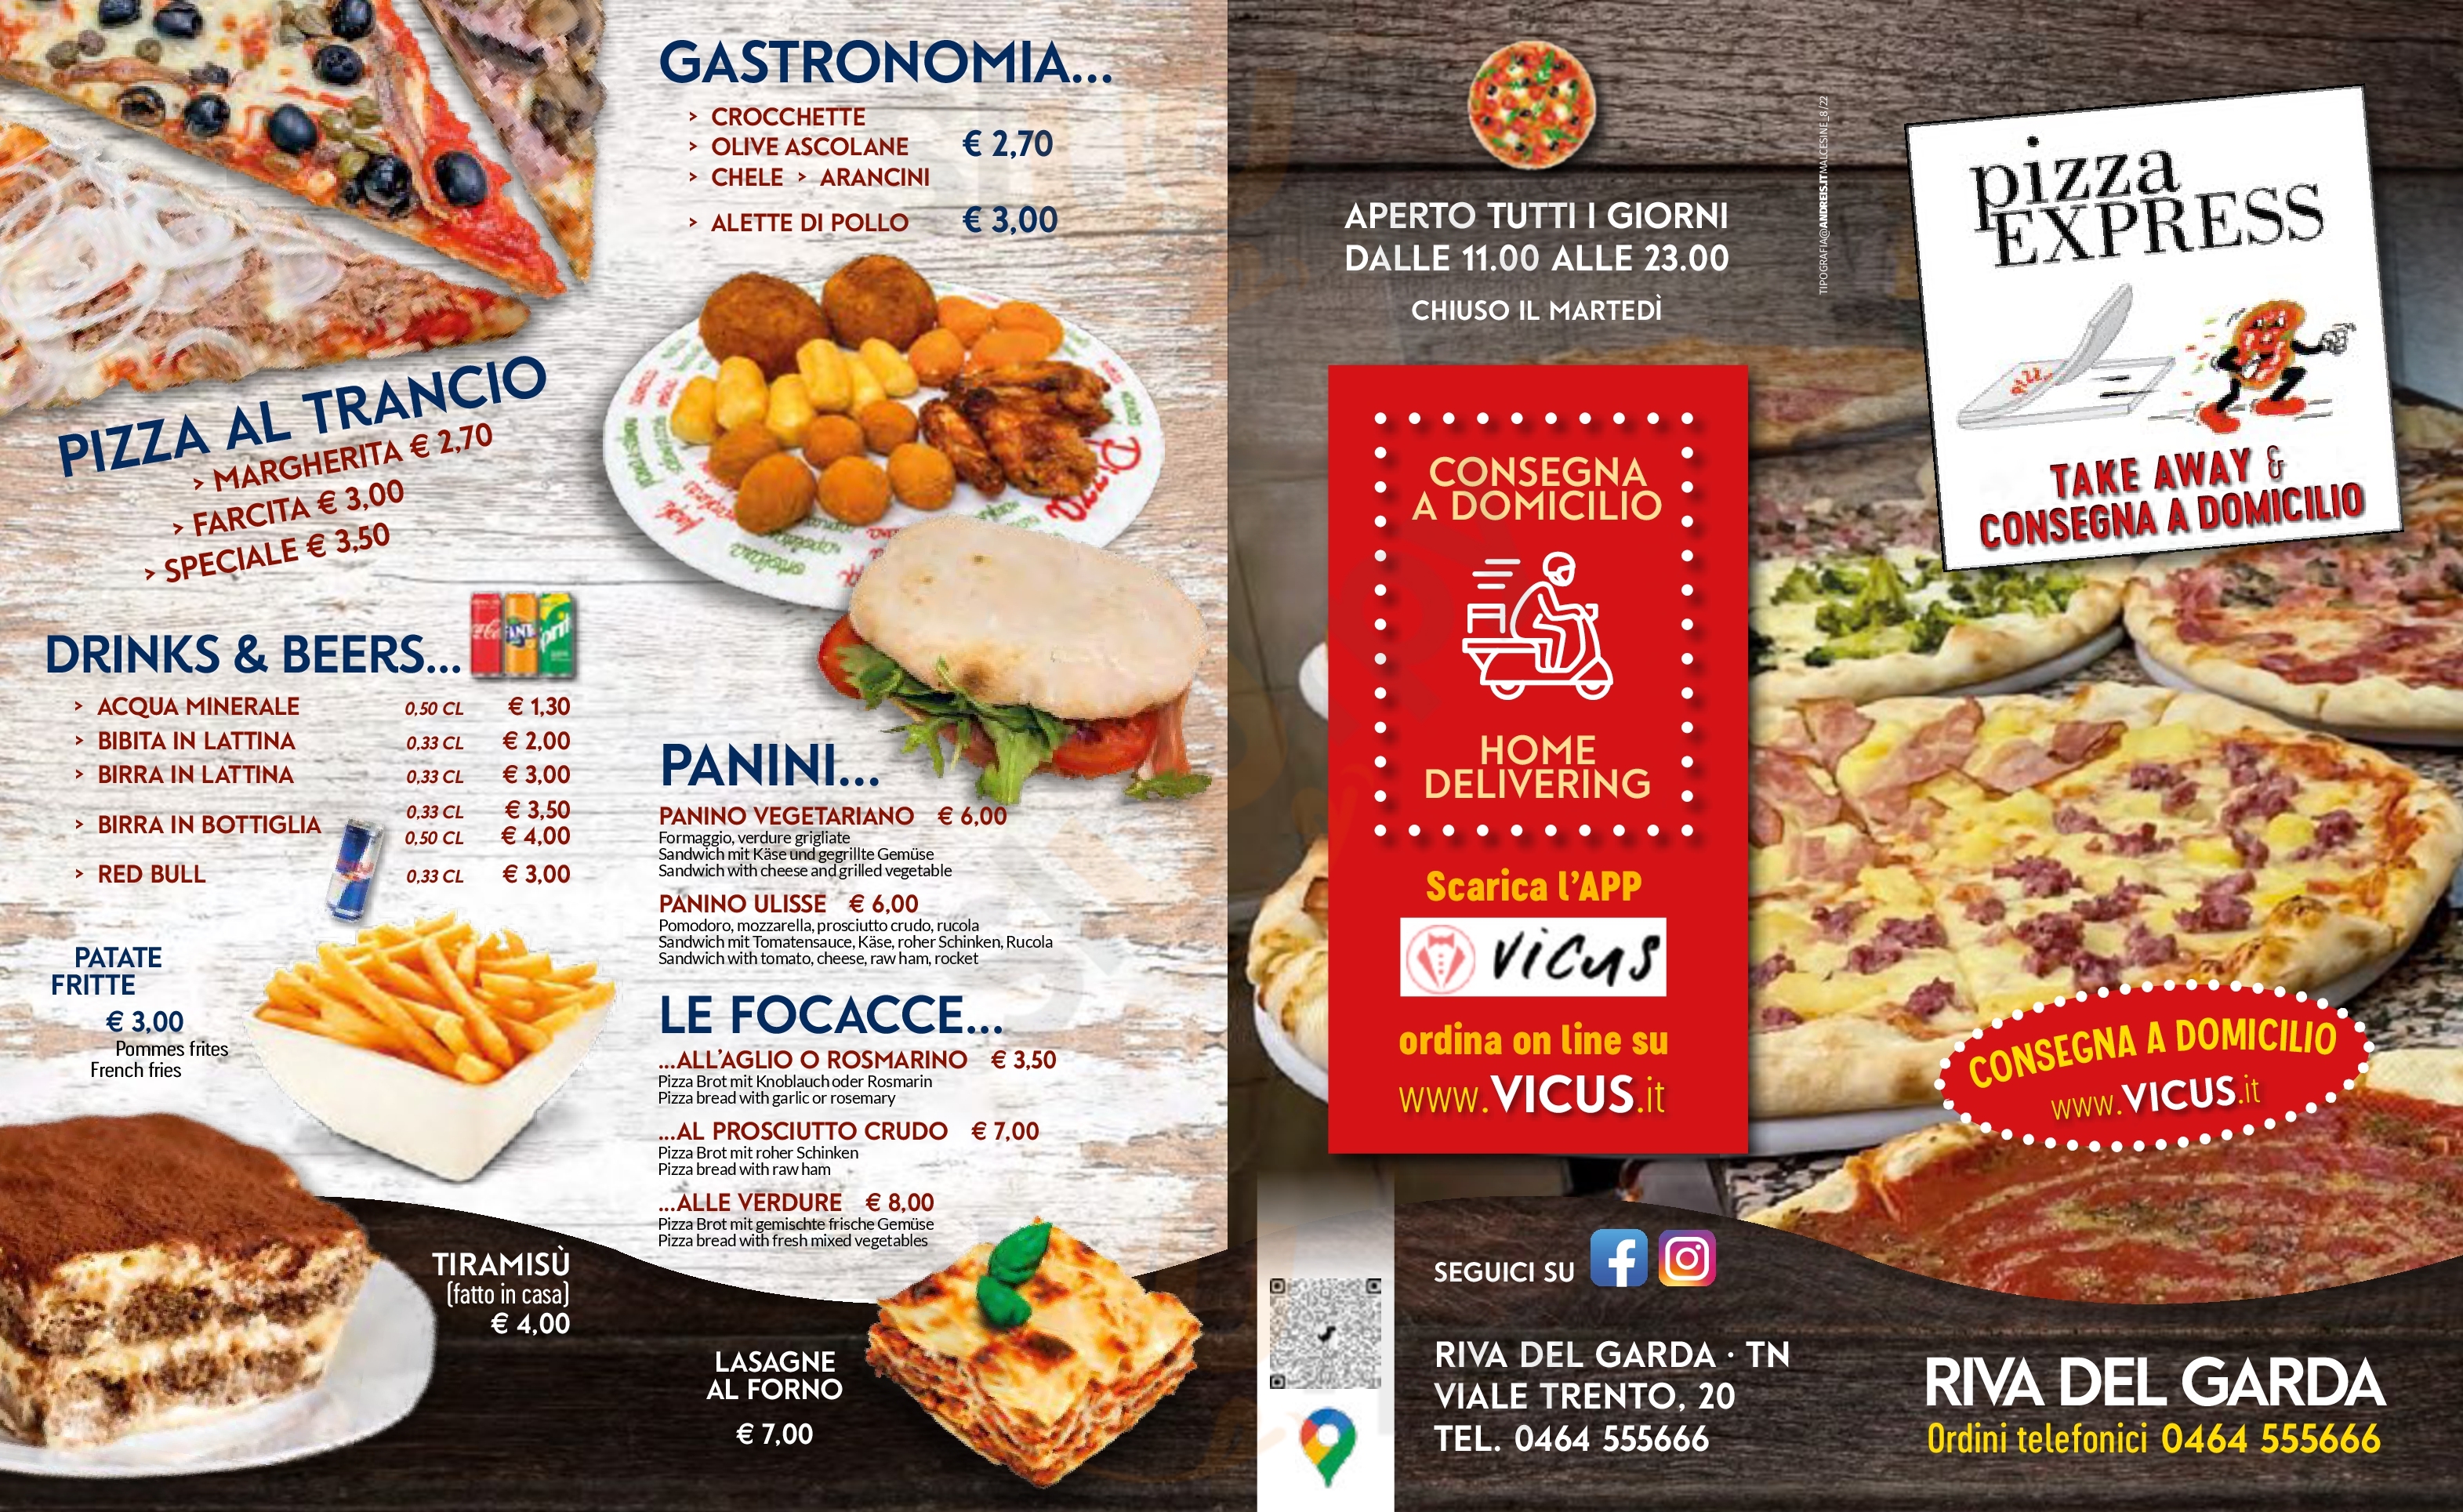 Pizzeria Express Riva Del Garda menù 1 pagina